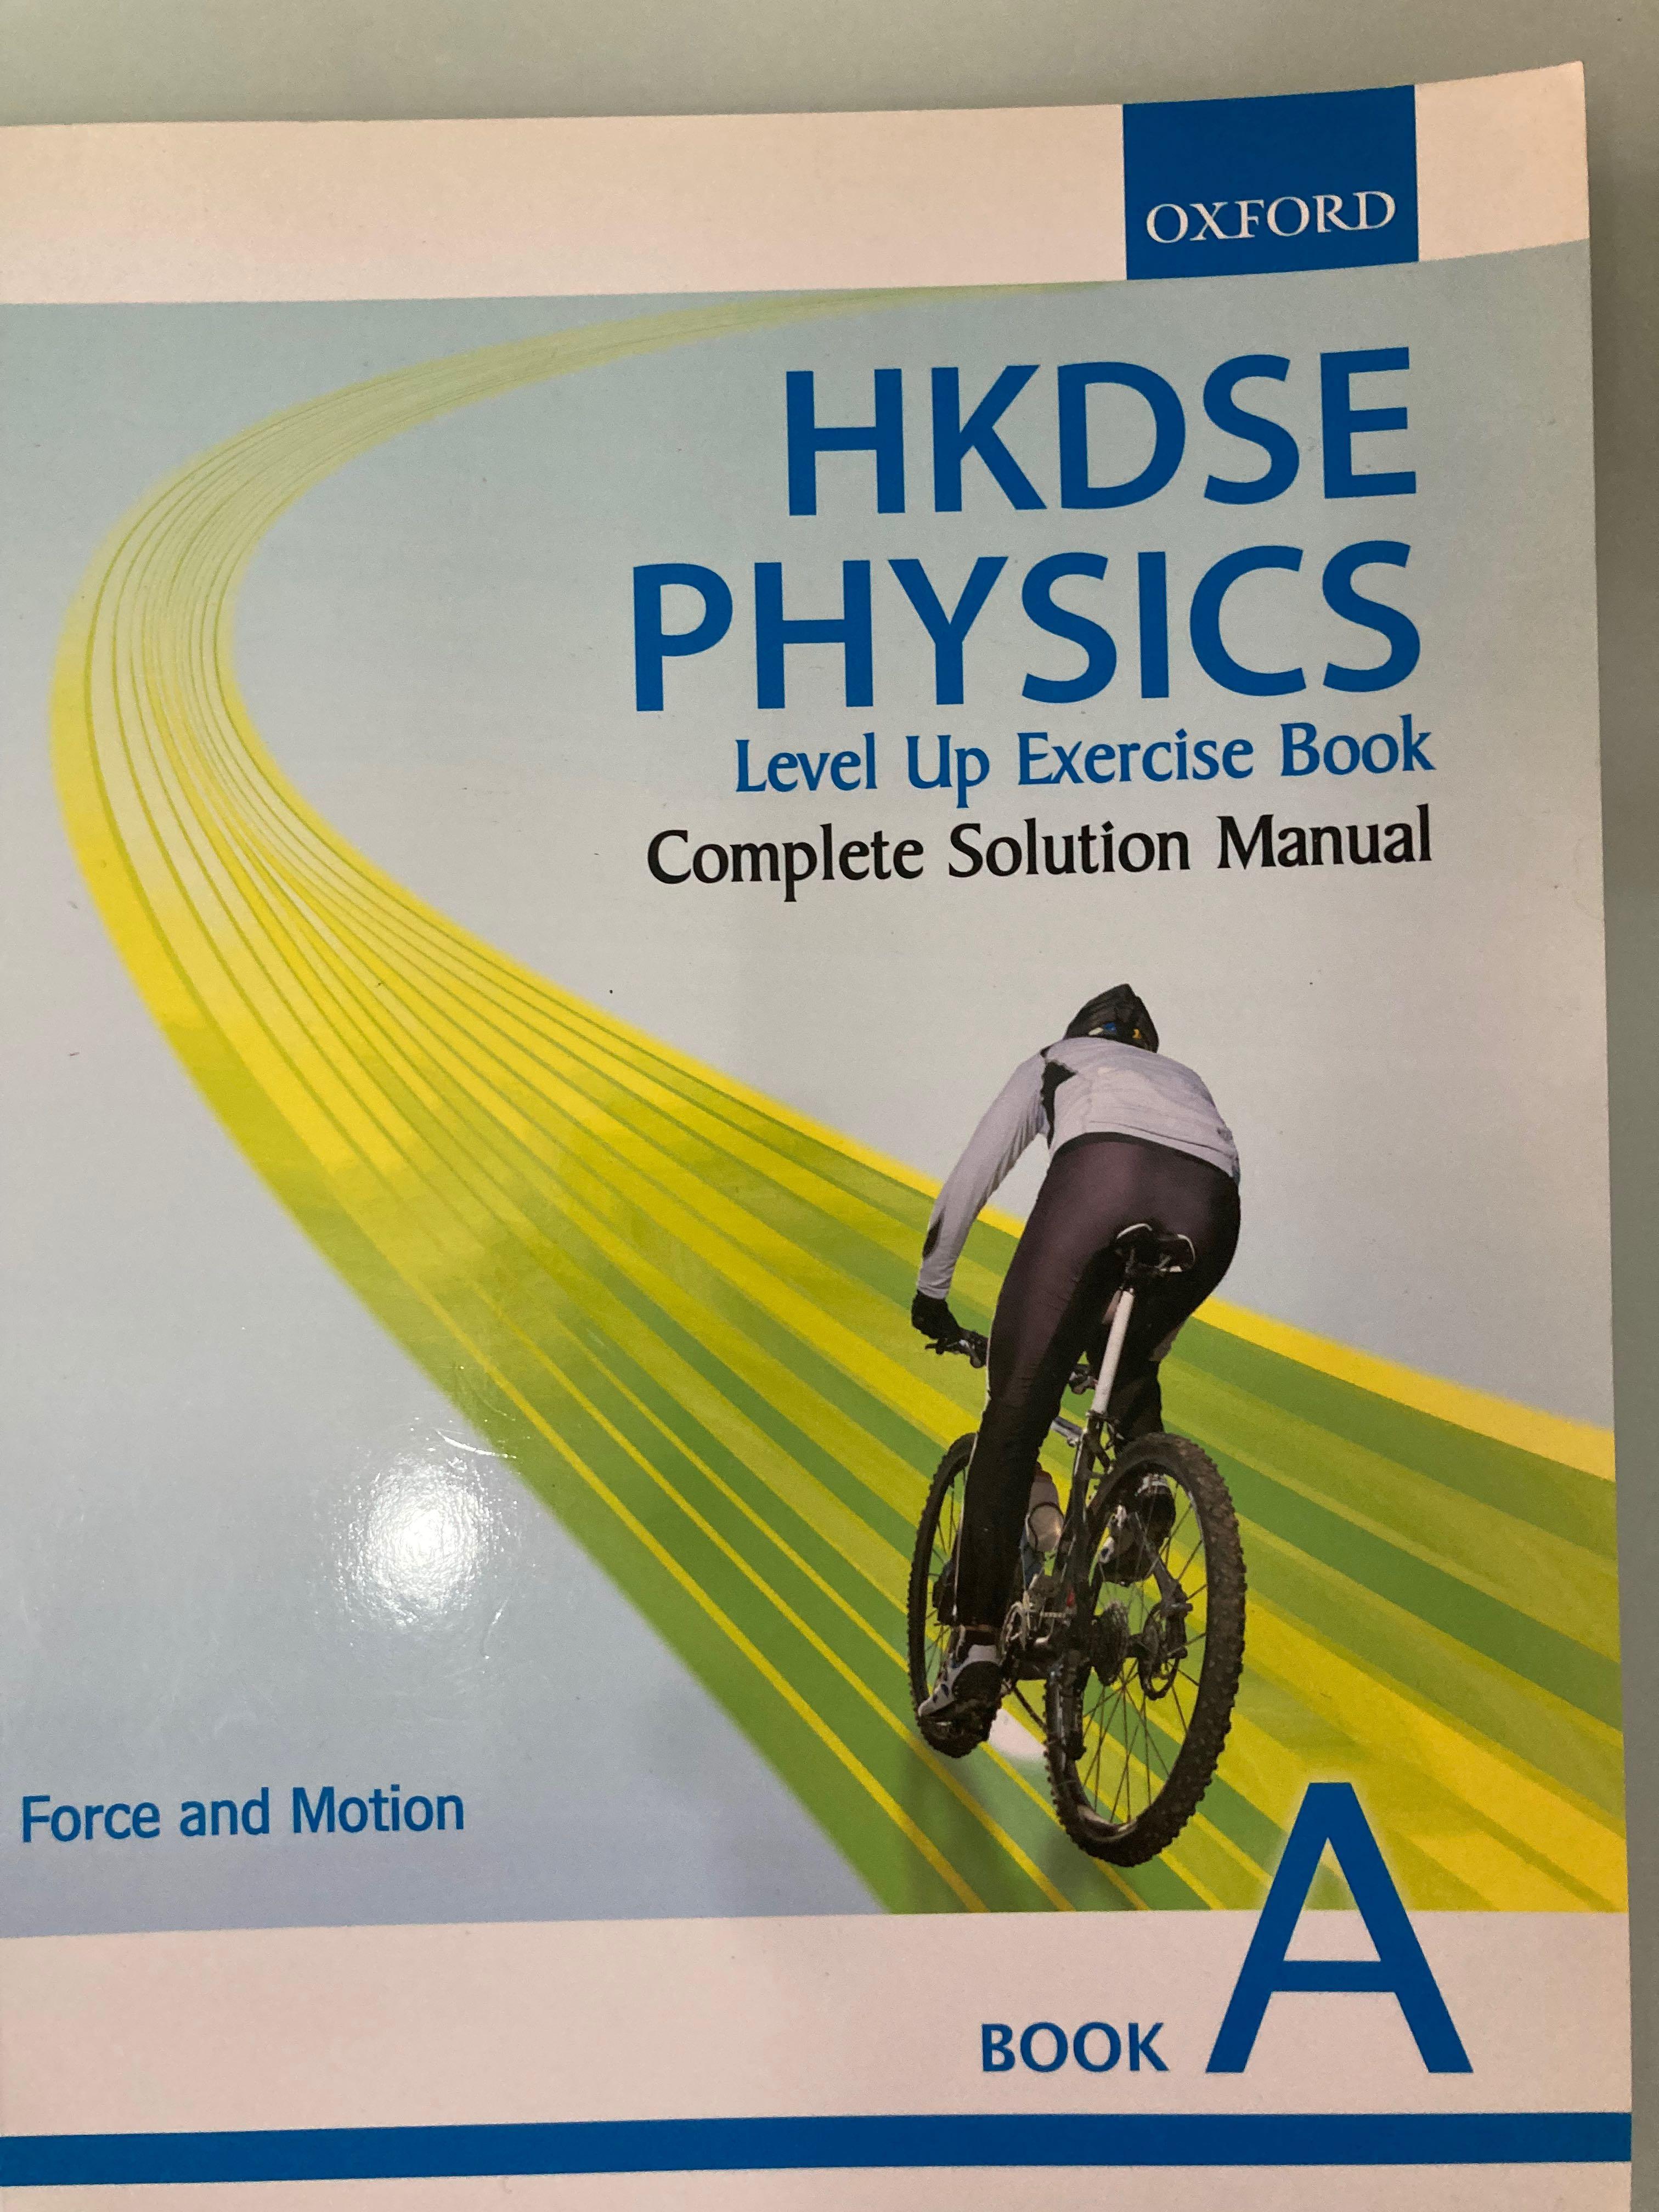 HKDSE Physics Level Up Exercise Book A新高中物理科練習連答案, 興趣 